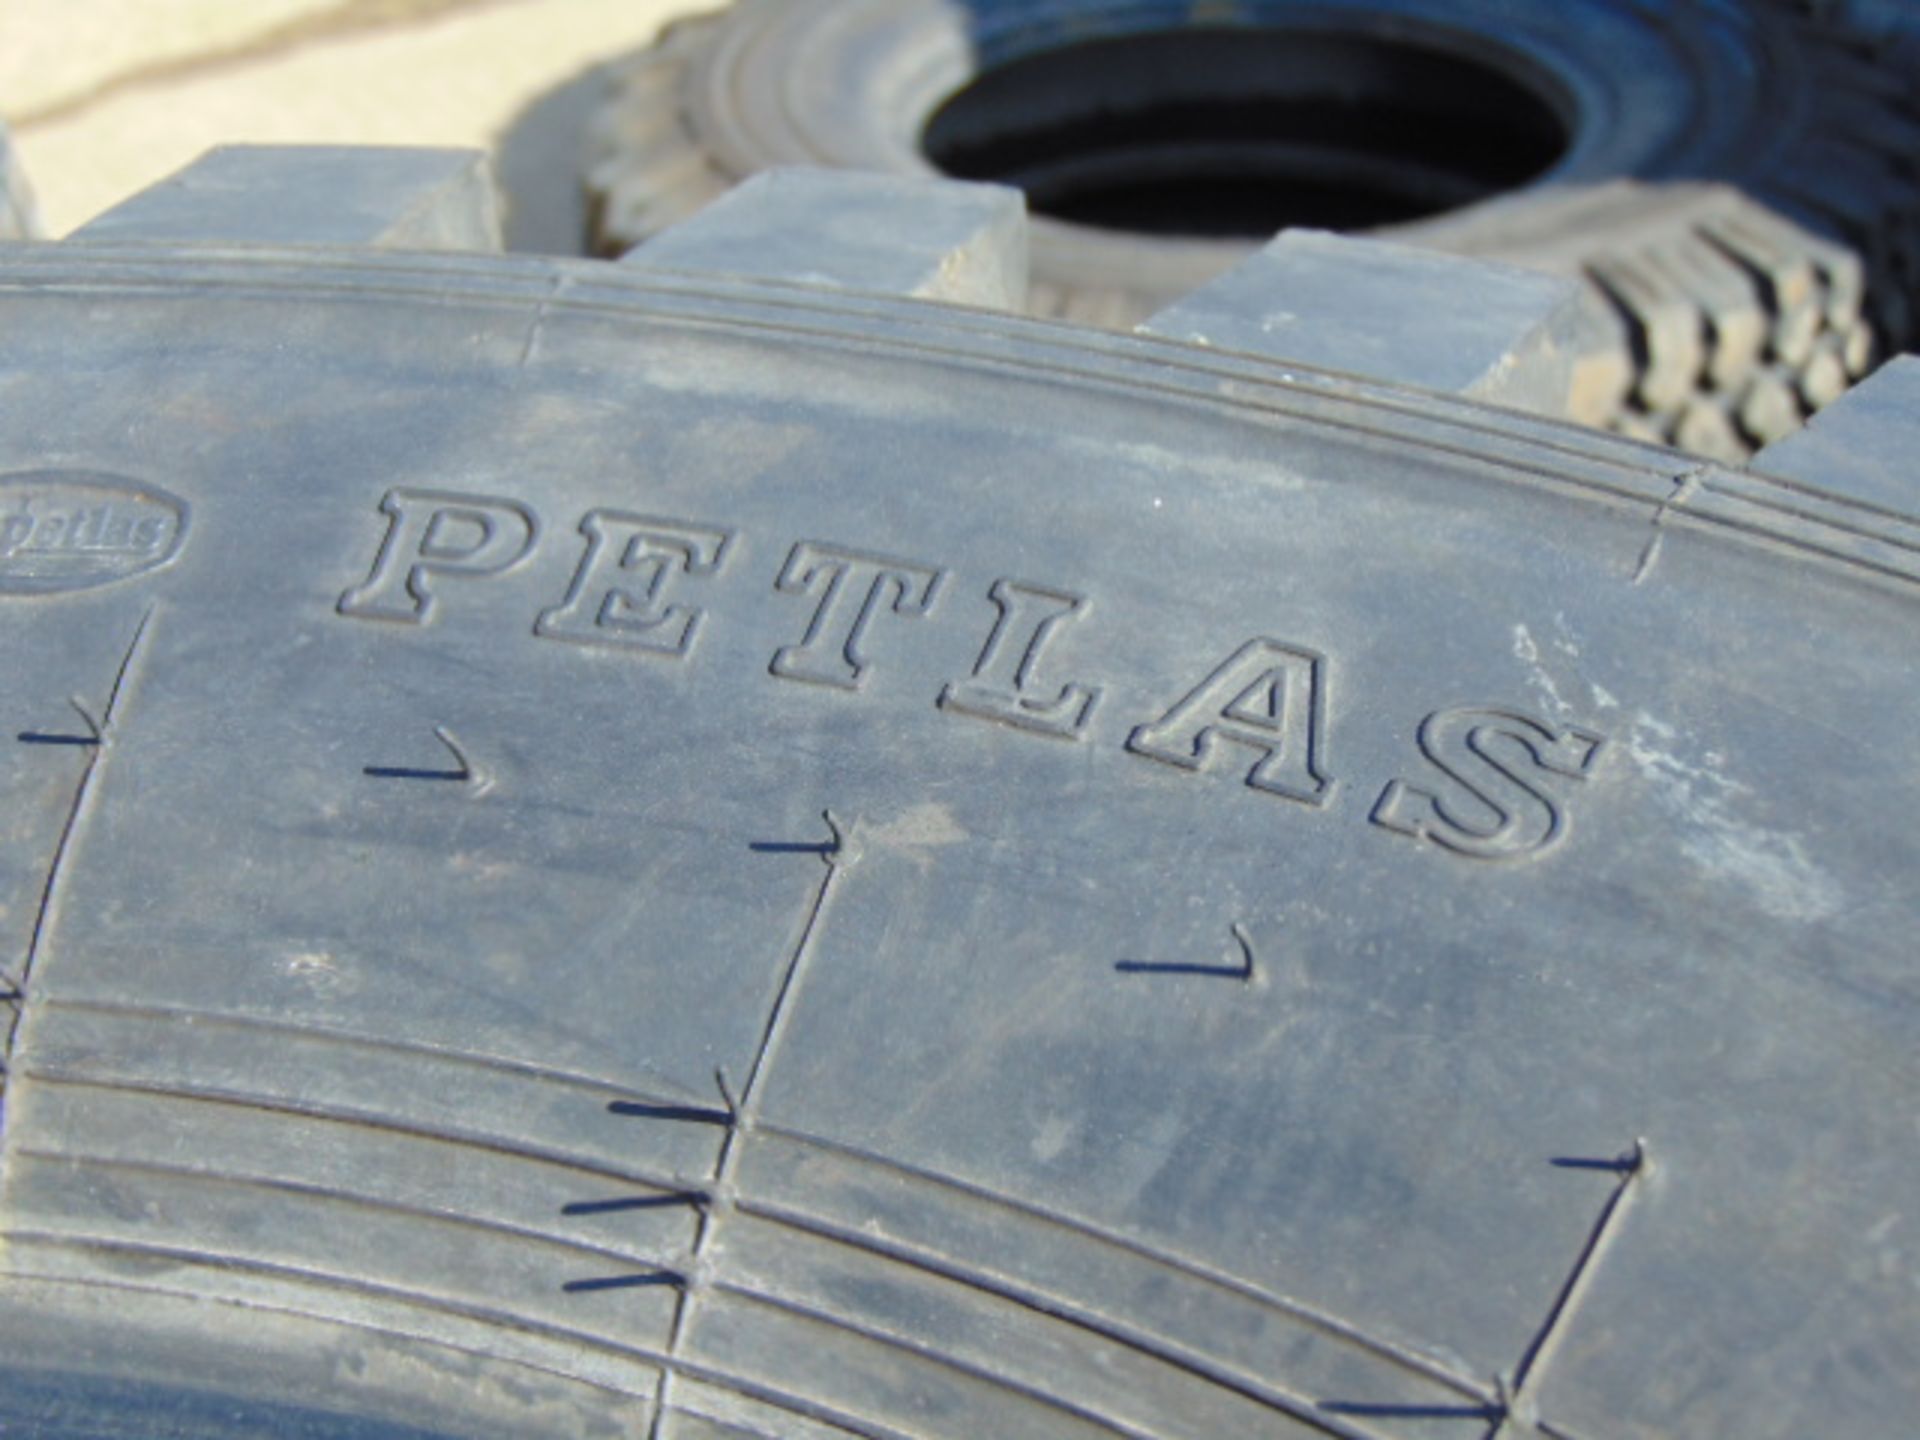 4 x Petlas 9.00-16 Light Truck Tyres - Image 4 of 6